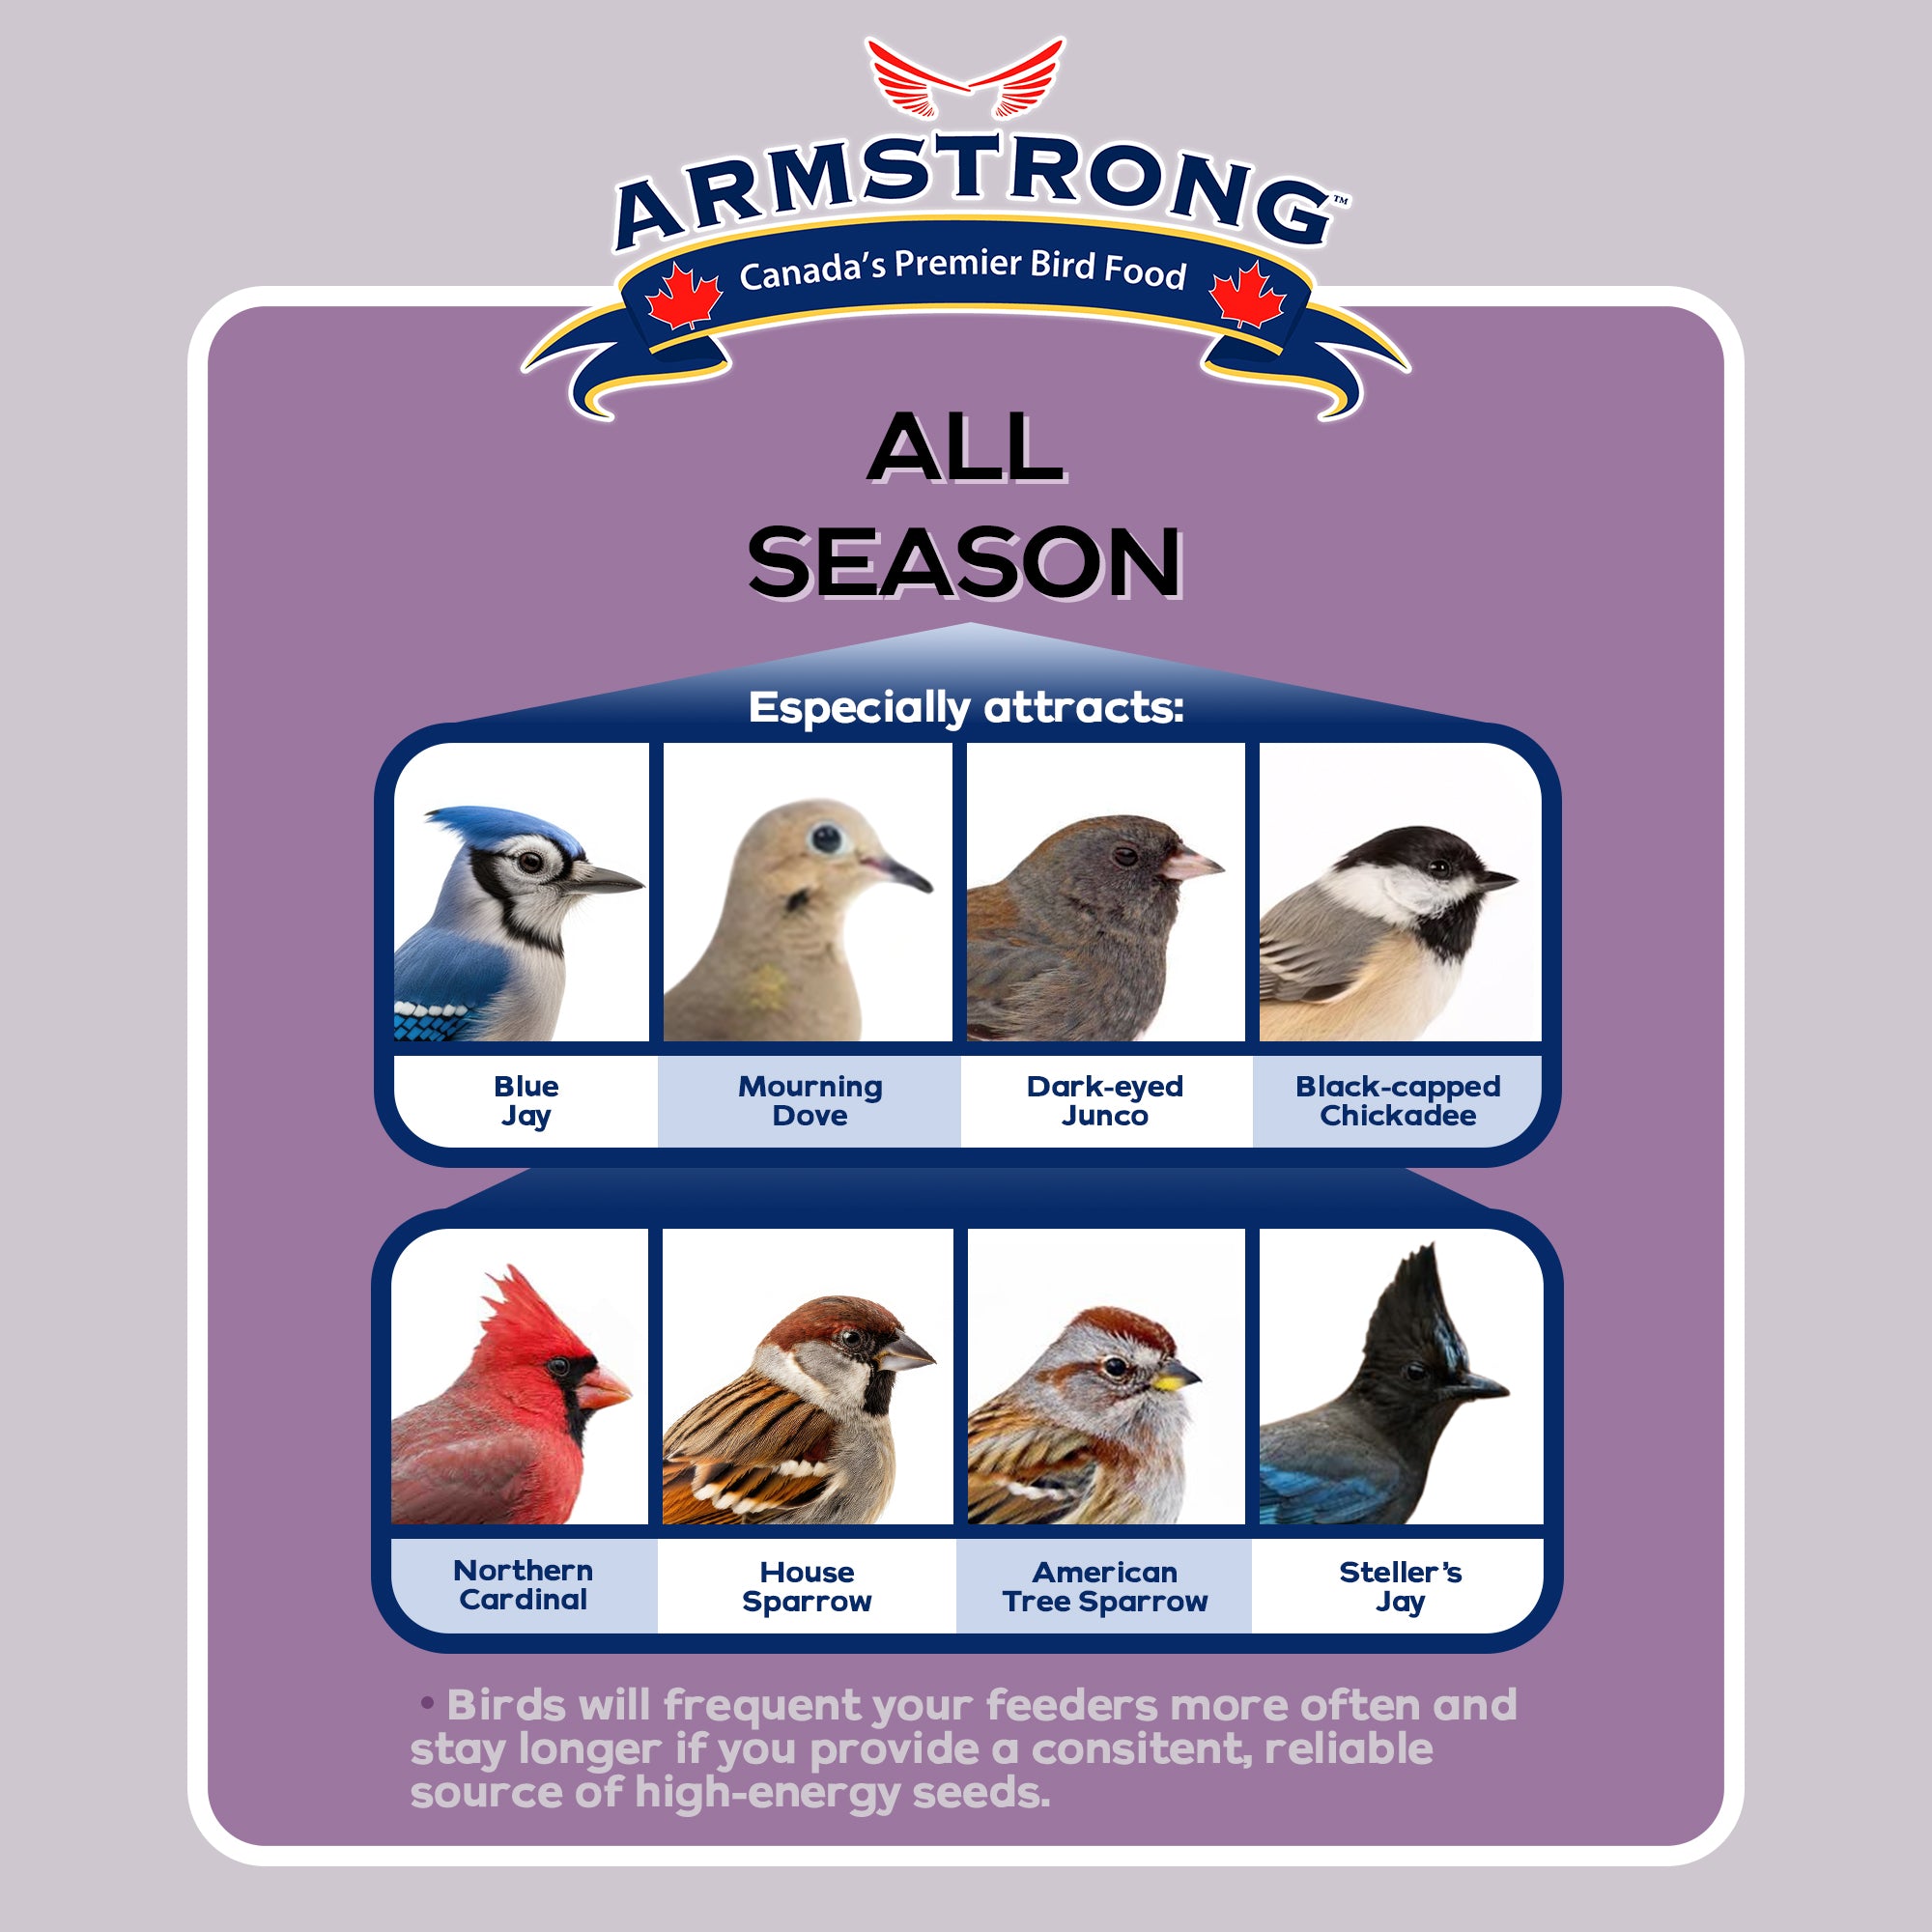 Armstrong Wild Bird Food All Season Bird Seed Blend